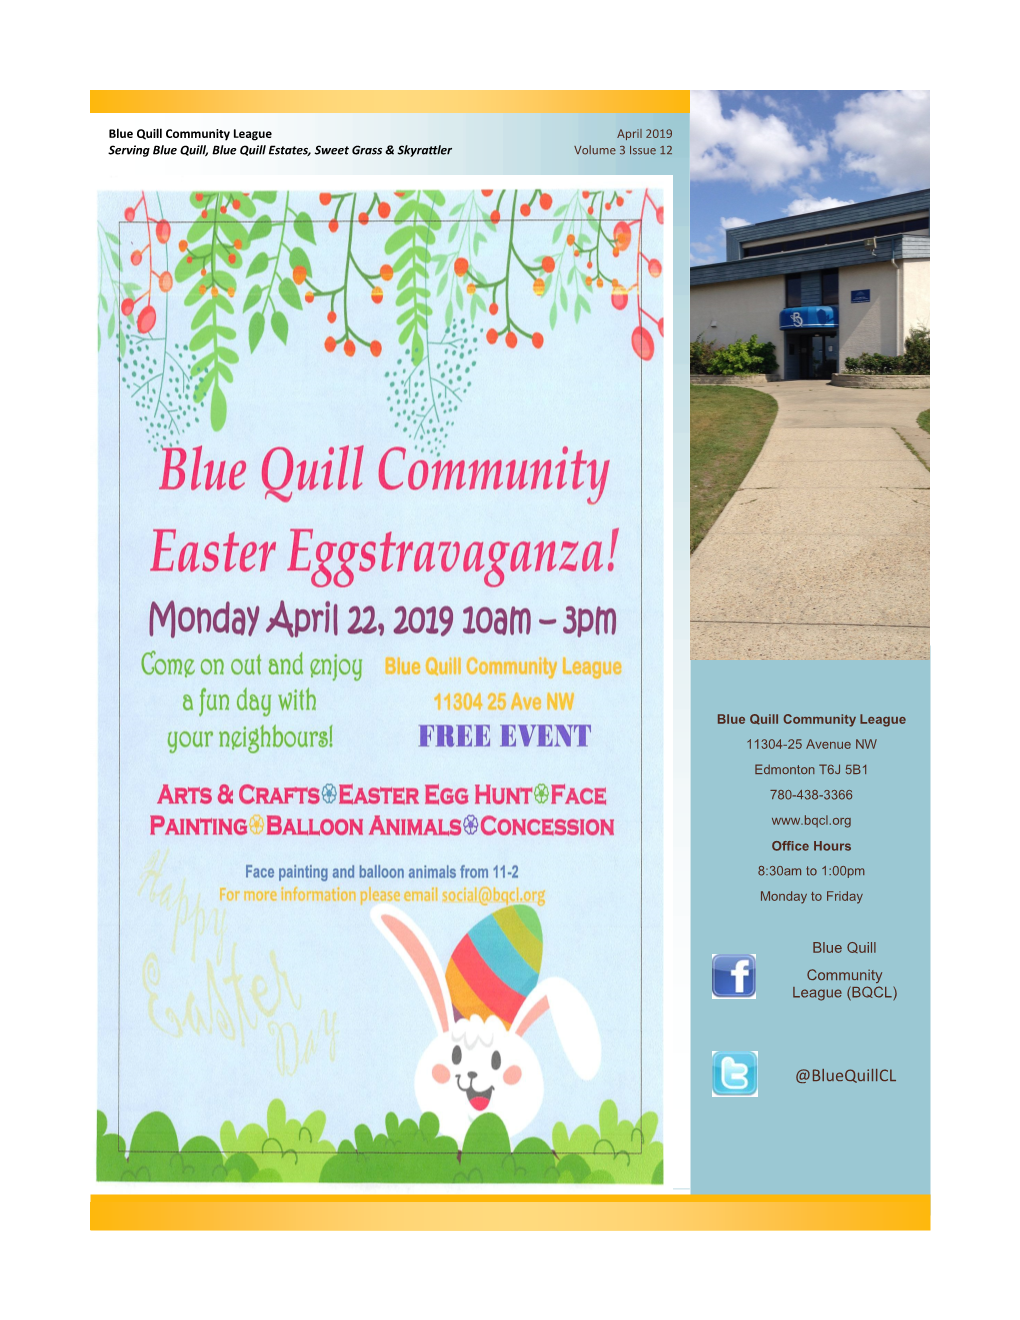 April 2019 Serving Blue Quill, Blue Quill Estates, Sweet Grass & Skyrattler Volume 3 Issue 12